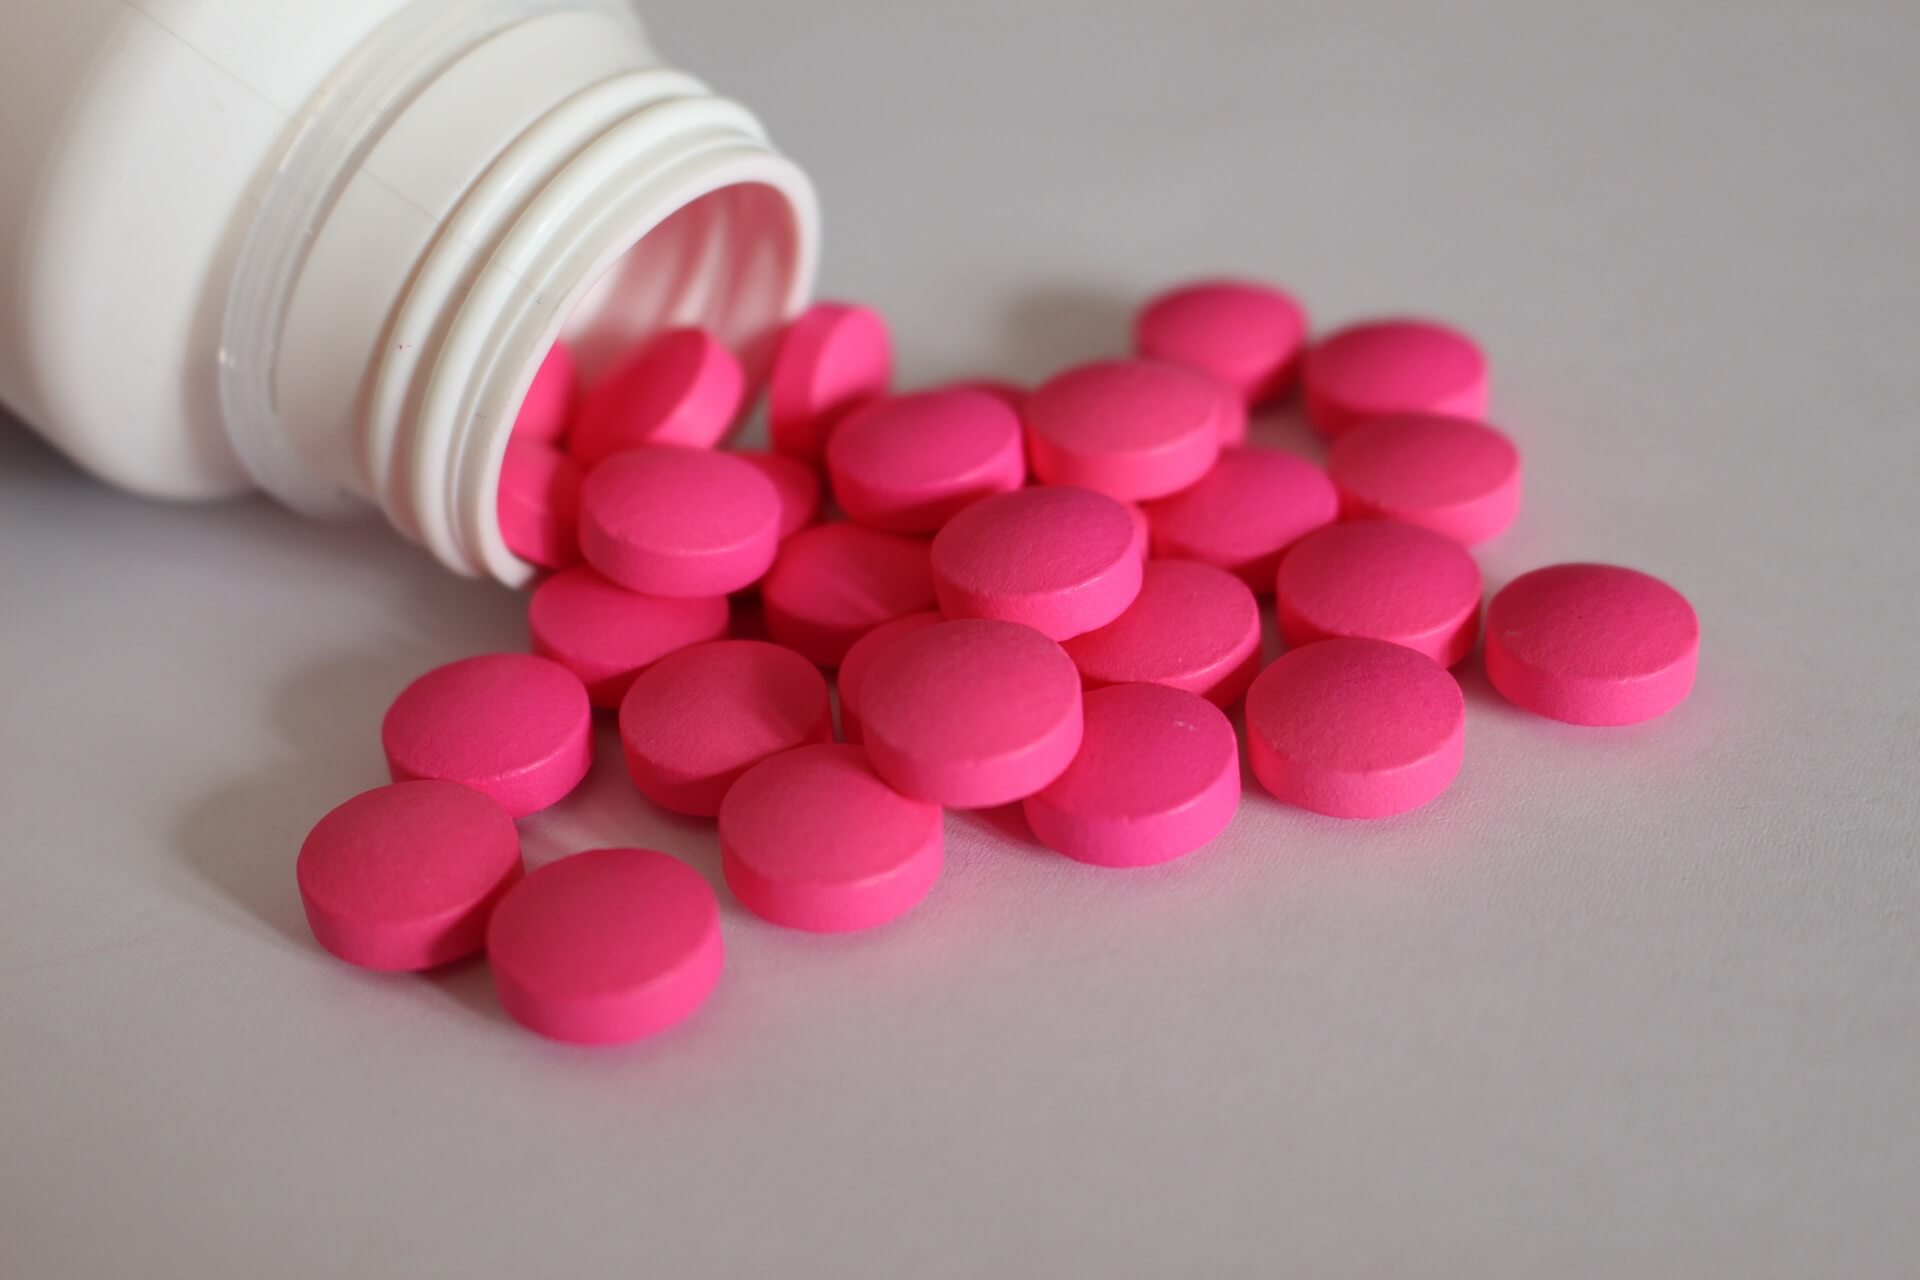 cbd global cbd drug test false positive ibuprofen